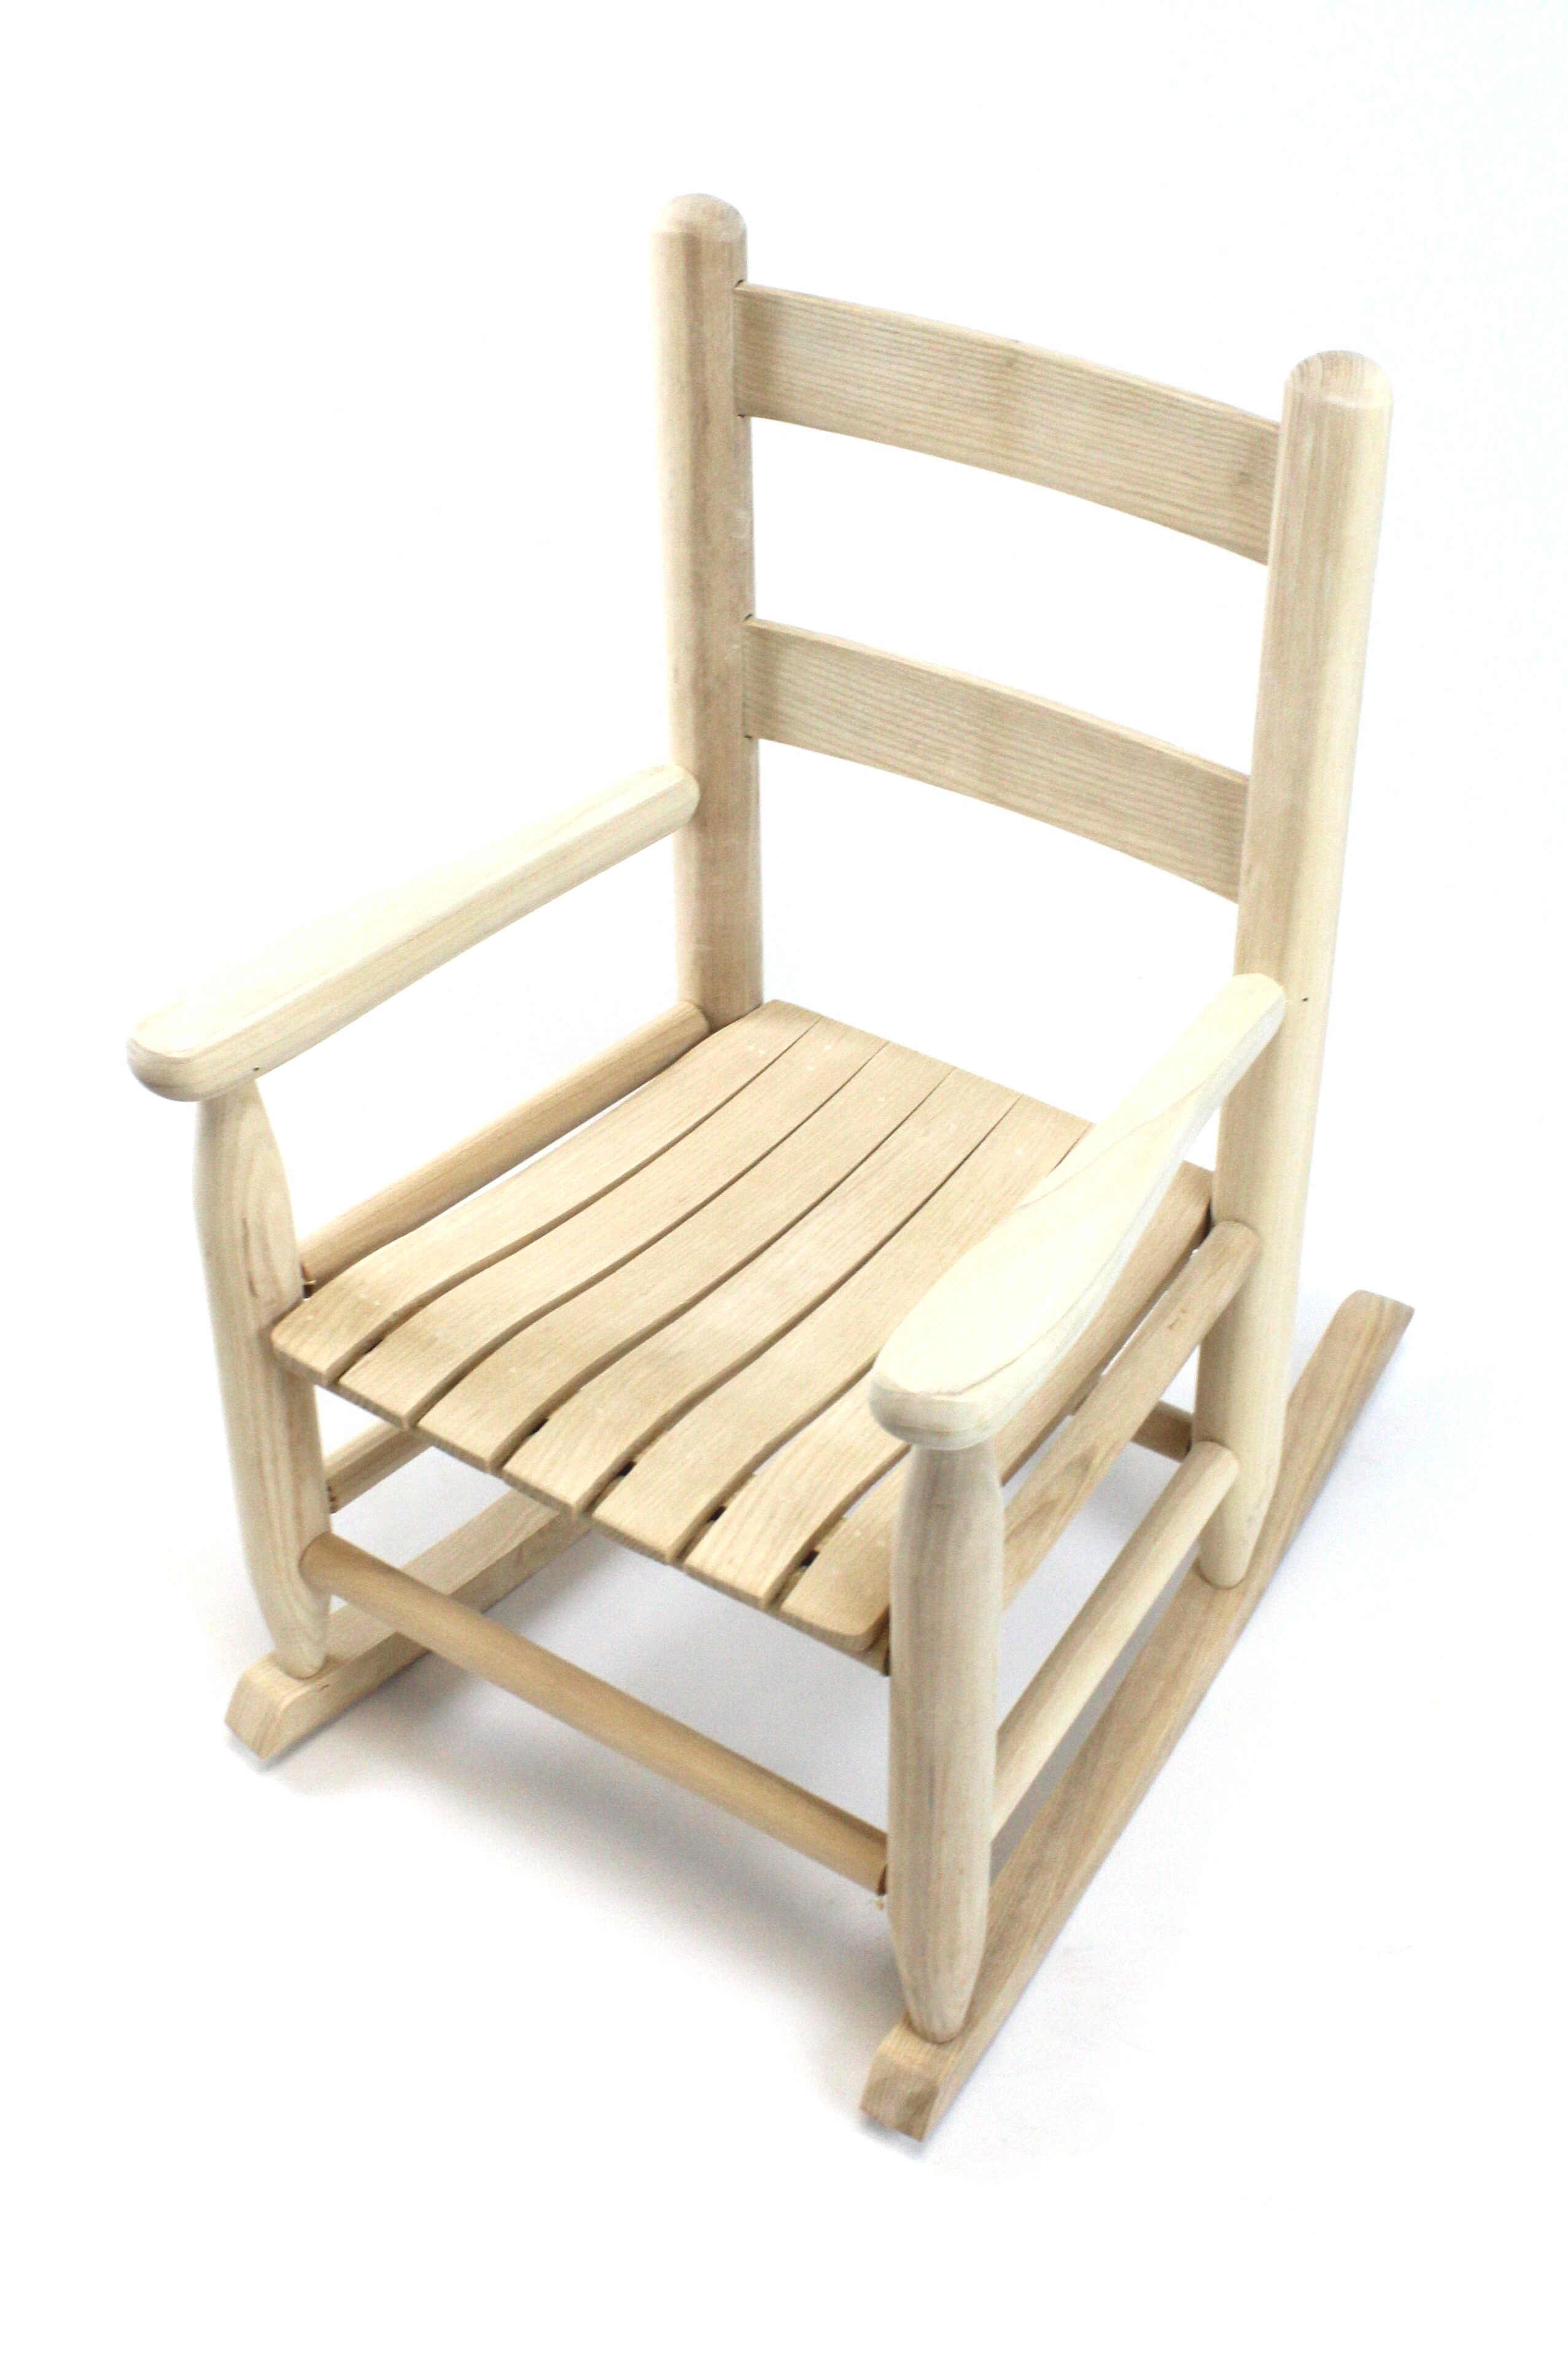 G4RCE Kids Children's Wooden Chair  2pcs Toddlers Furniture Indoor,Outdoor New 